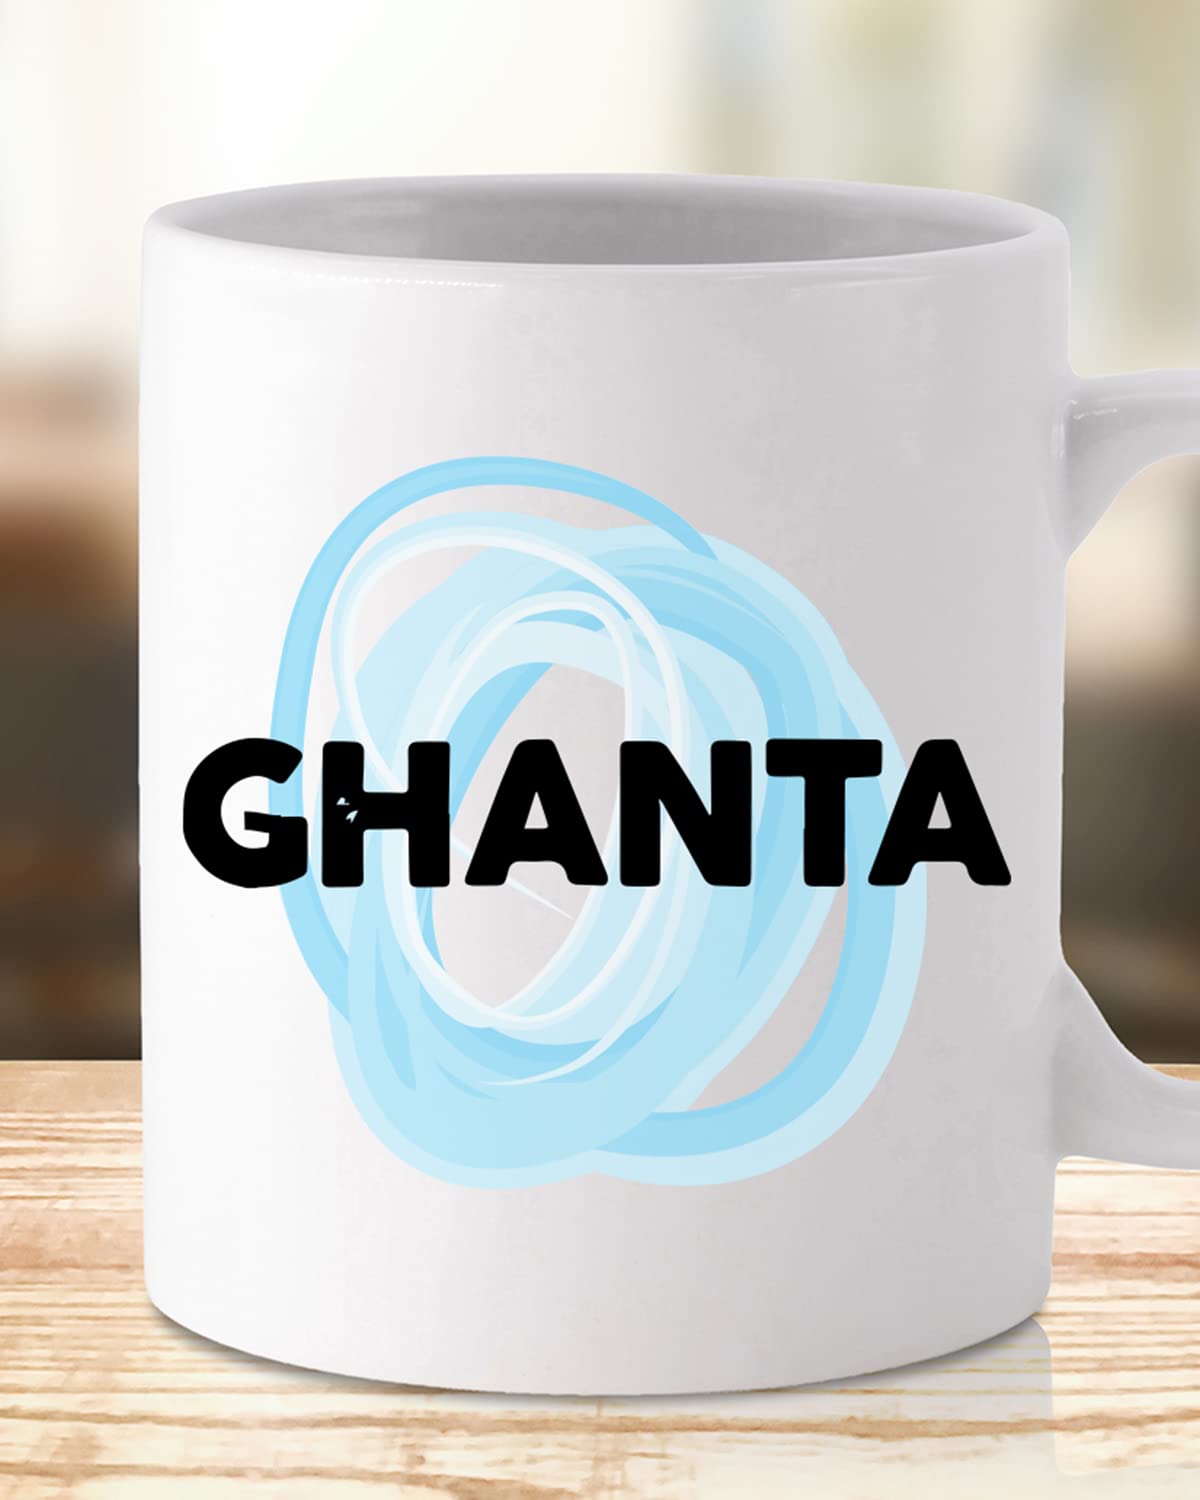 GHANTA Coffee Mug - Gift for Friend, Birthday Gift, Birthday Mug, Sarcasm Quotes Mug, Mugs with Funny & Funky Dialogues, Bollywood Mugs, Funny Mugs for Him & Her